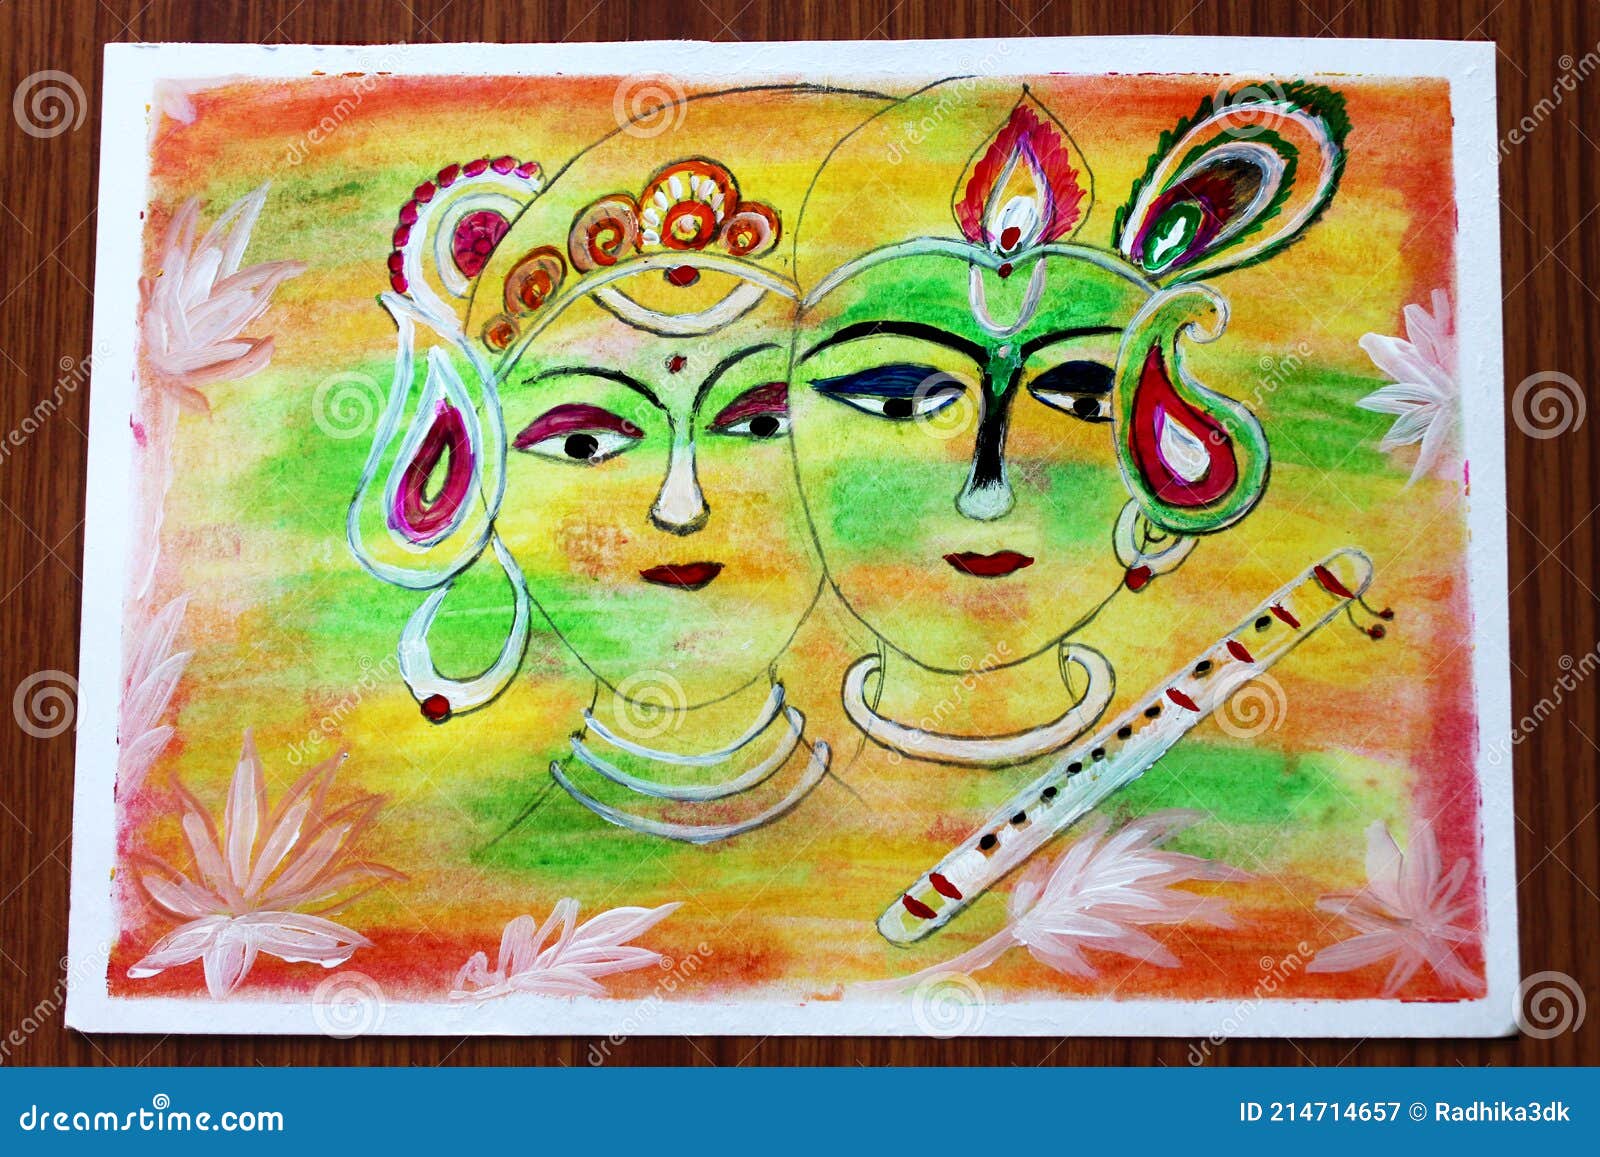 Radha Krishna Holi Abstract Painting Stock Image - Image of mural ...